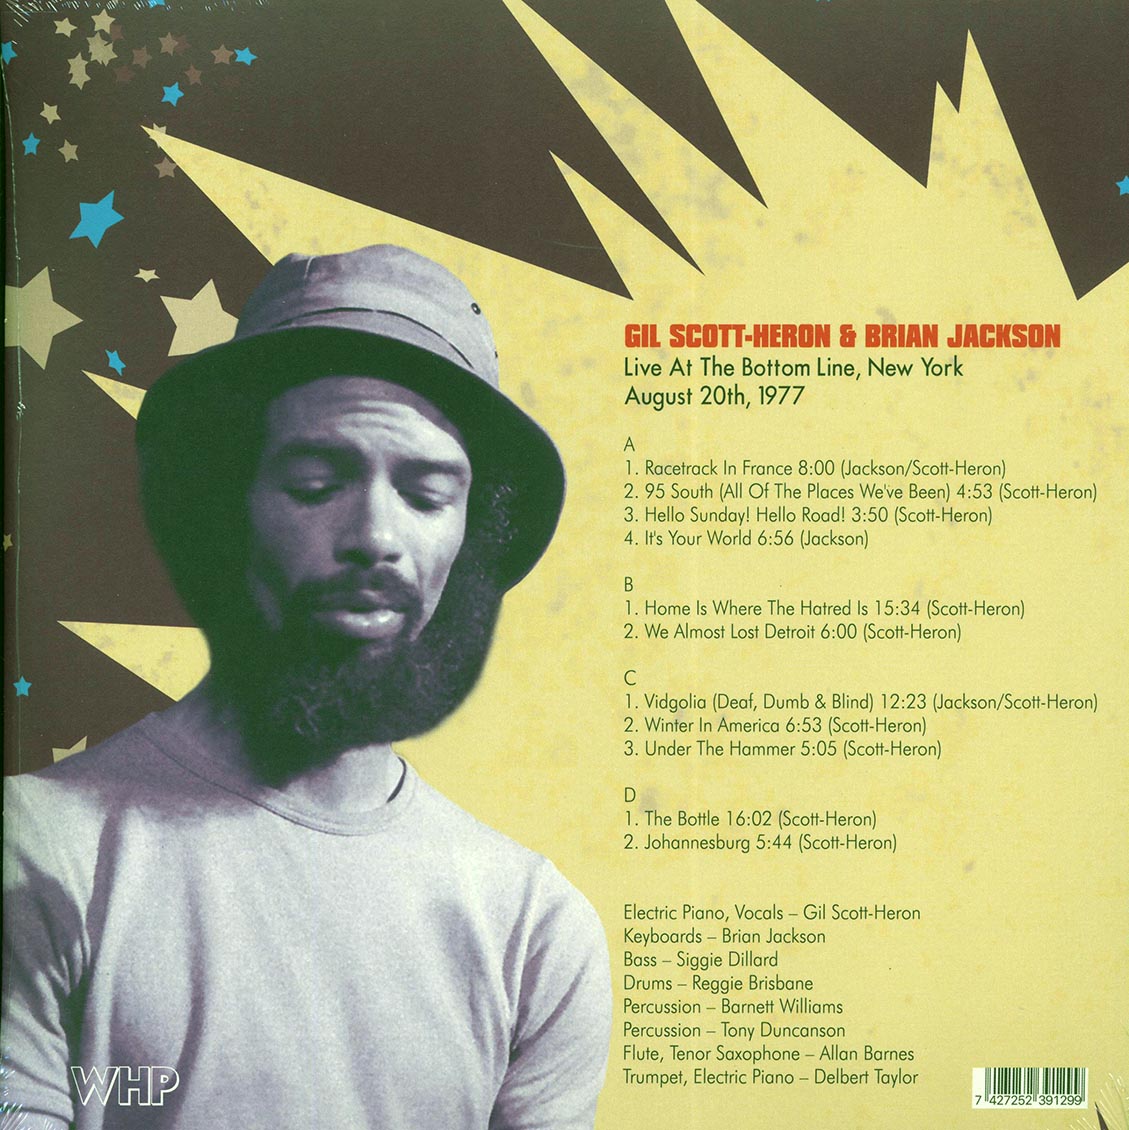 Gil Scott-Heron, Brian Jackson - Live At The Bottom Line, New York, August 20th, 1977 (2xLP) - Vinyl LP, LP